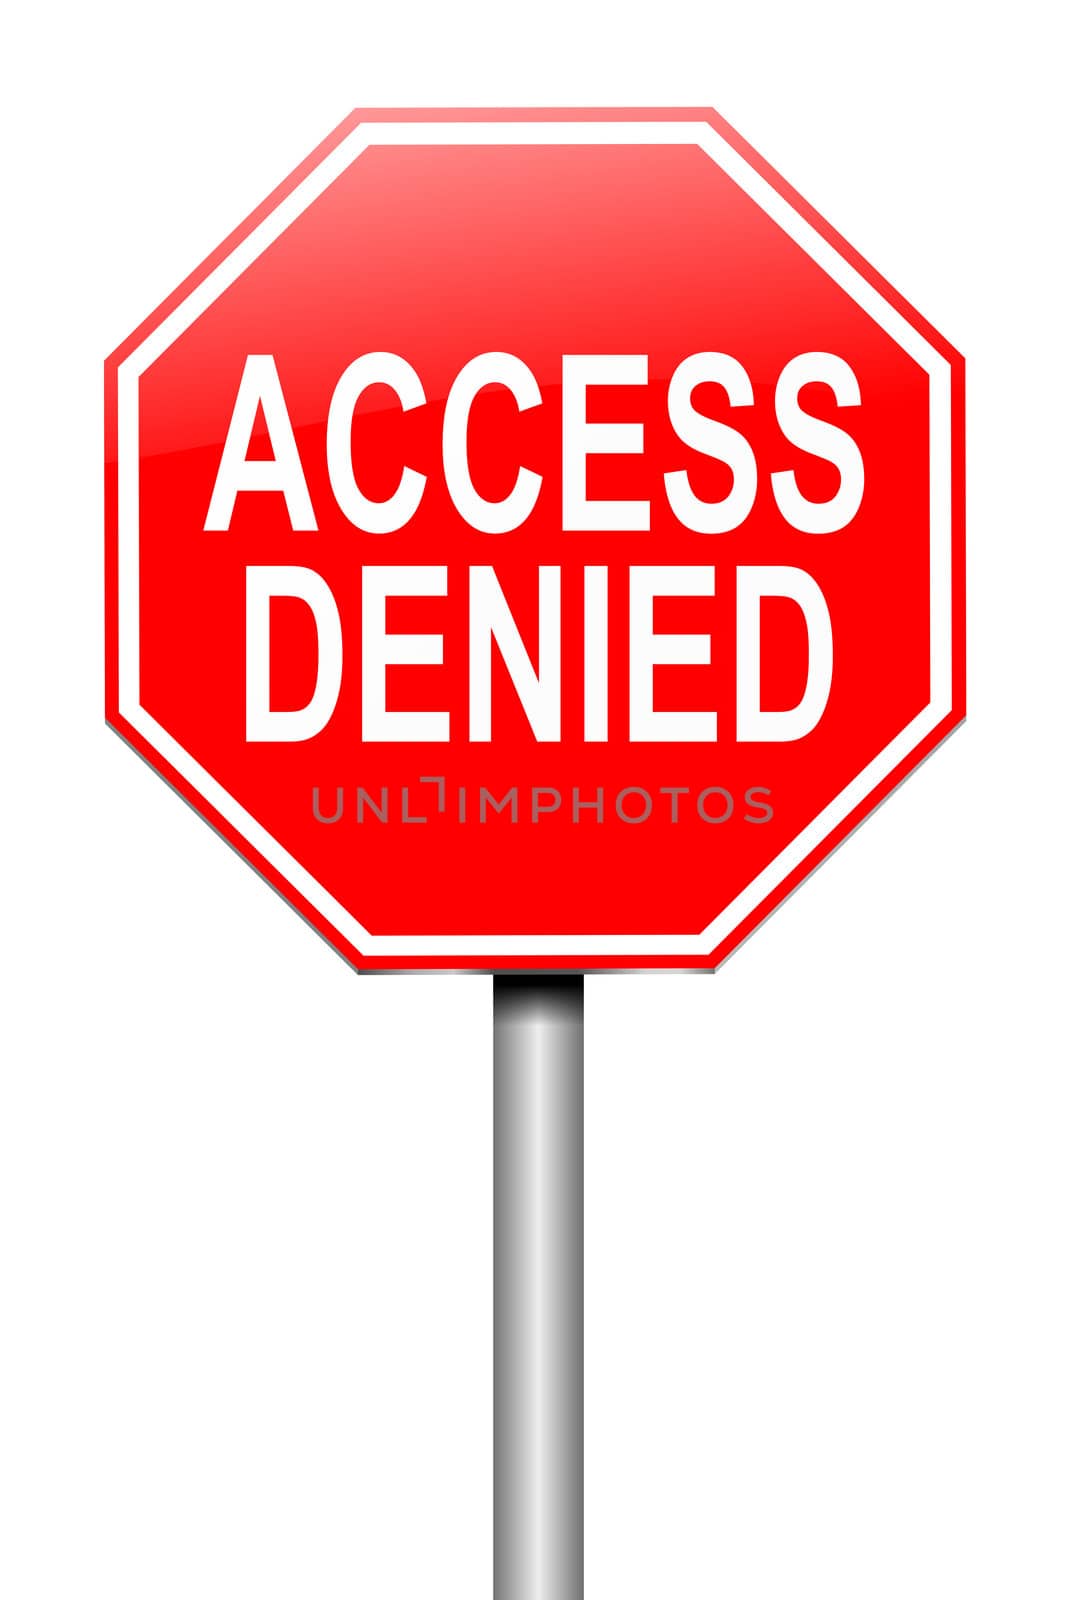 Access denied concept. by 72soul